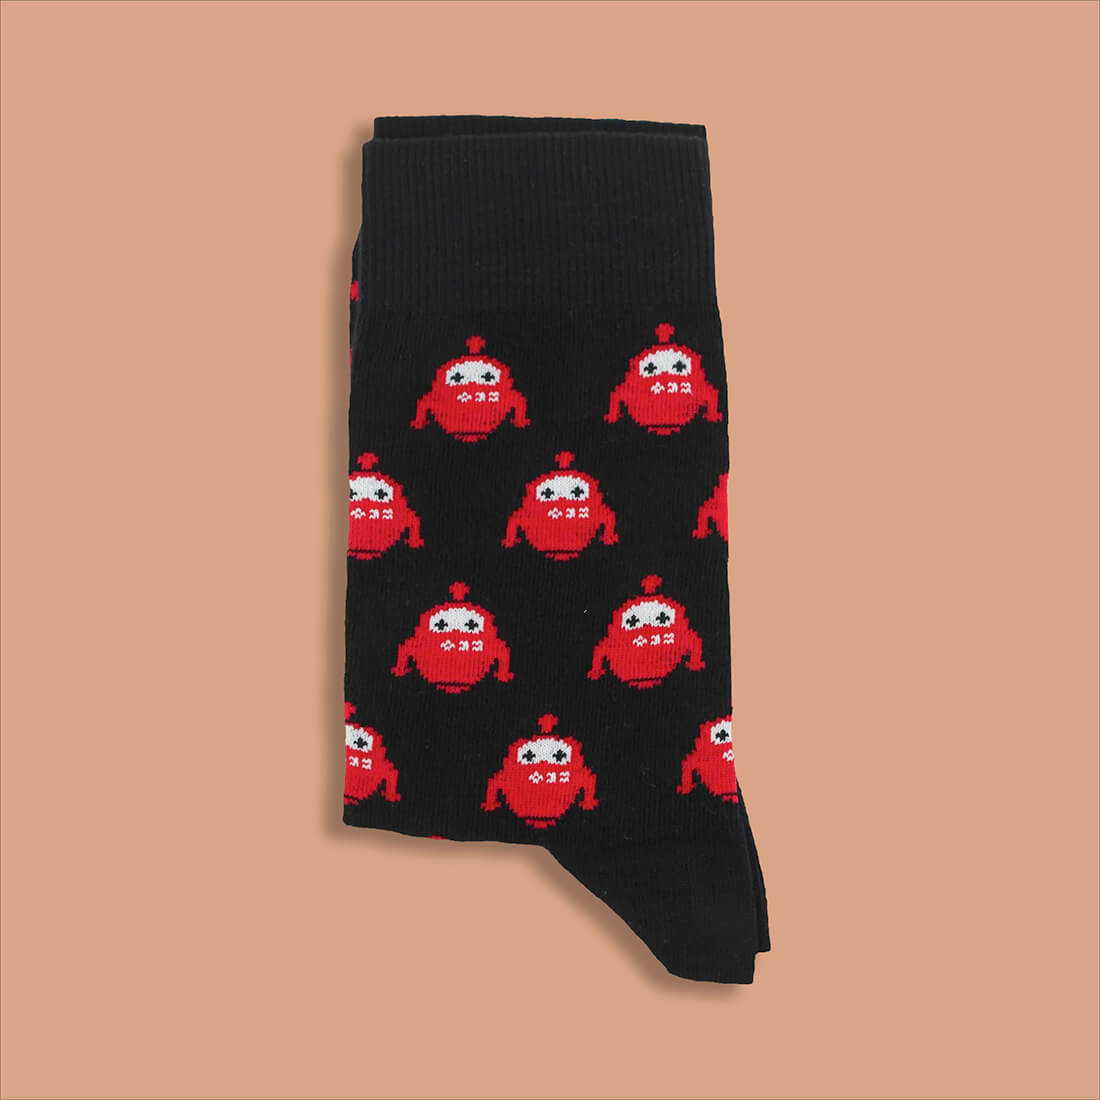 MyPromoSocks - Bespoke branded promotional socks